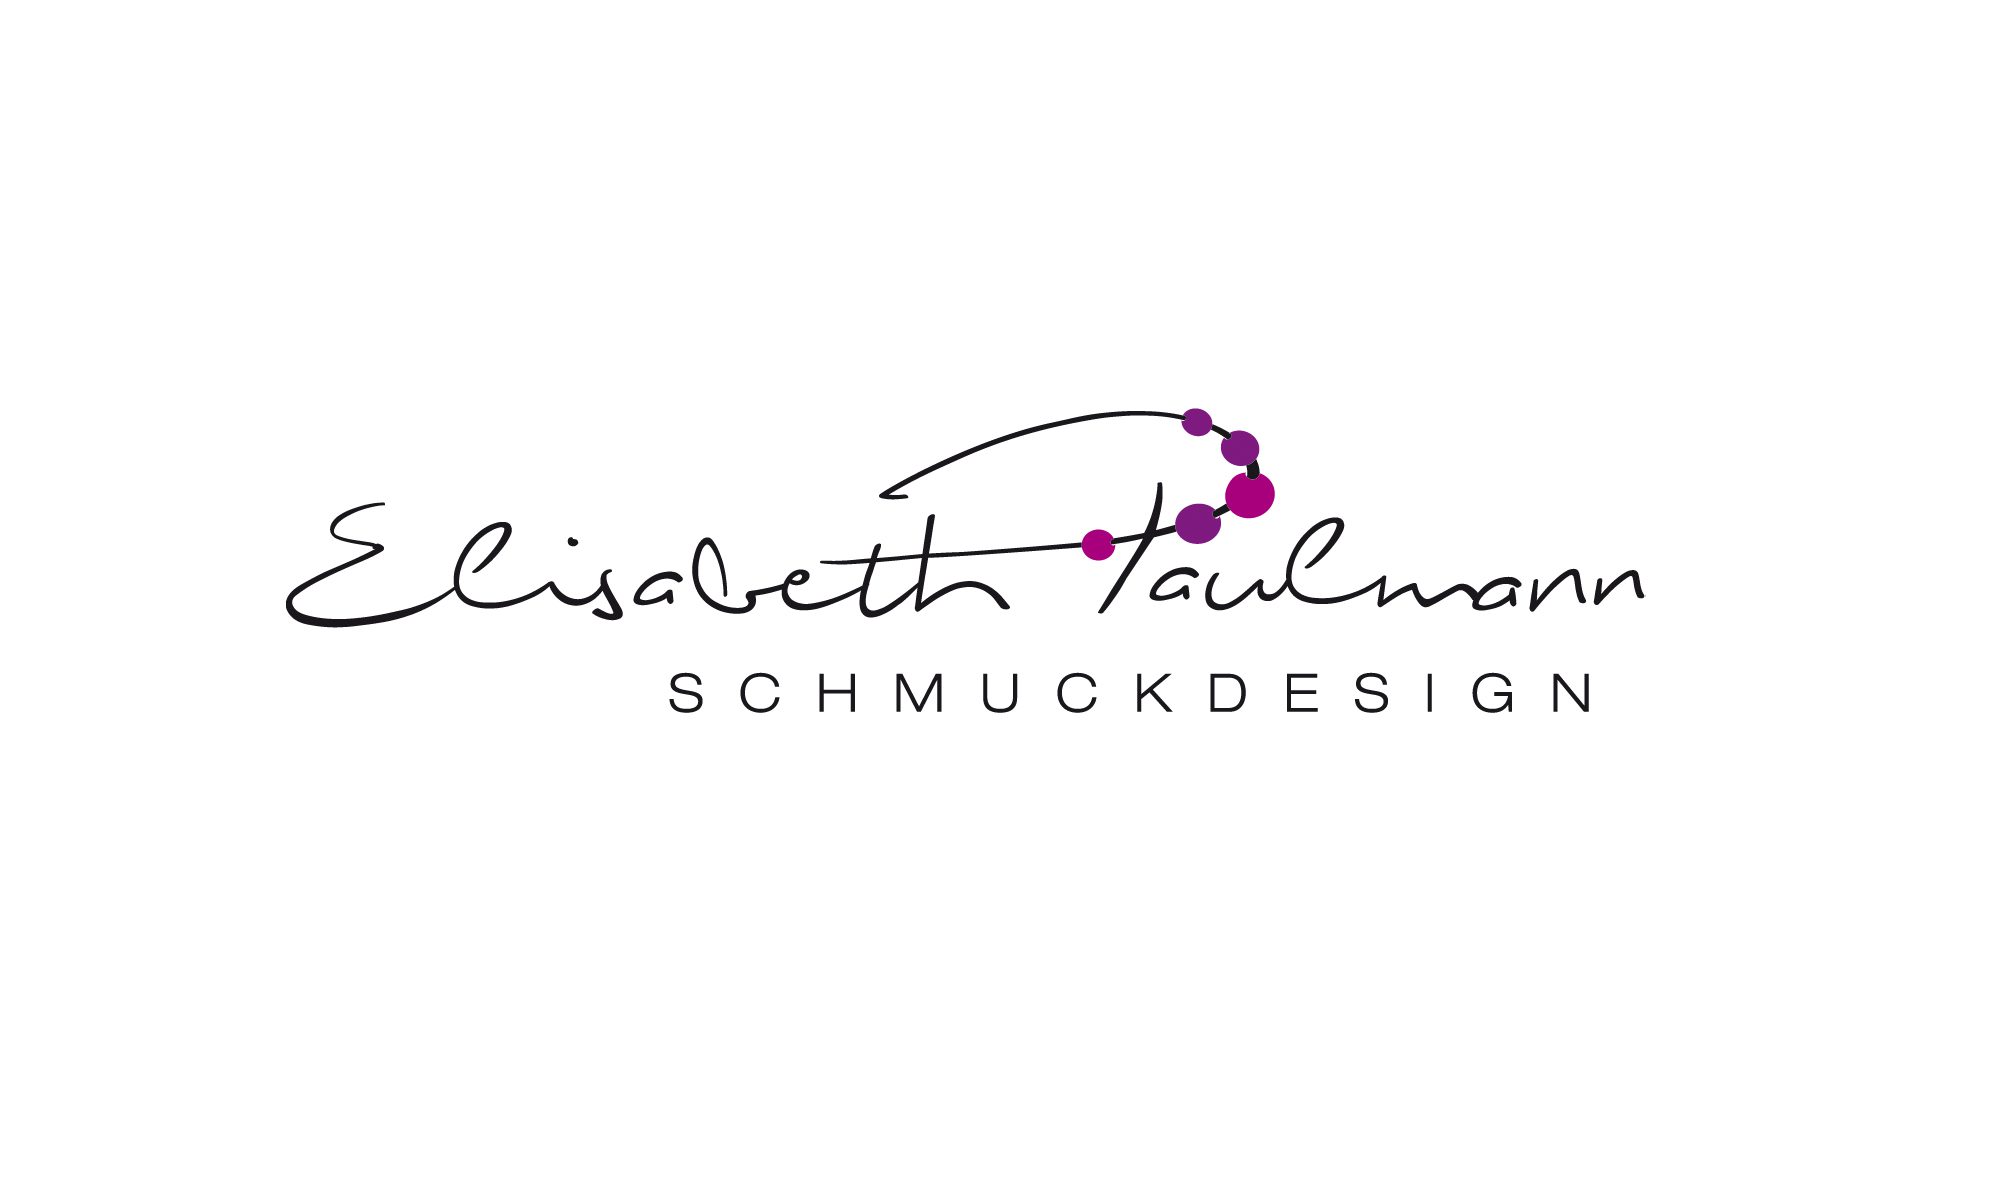 Elisabeth Paulmann Schmuckdesign